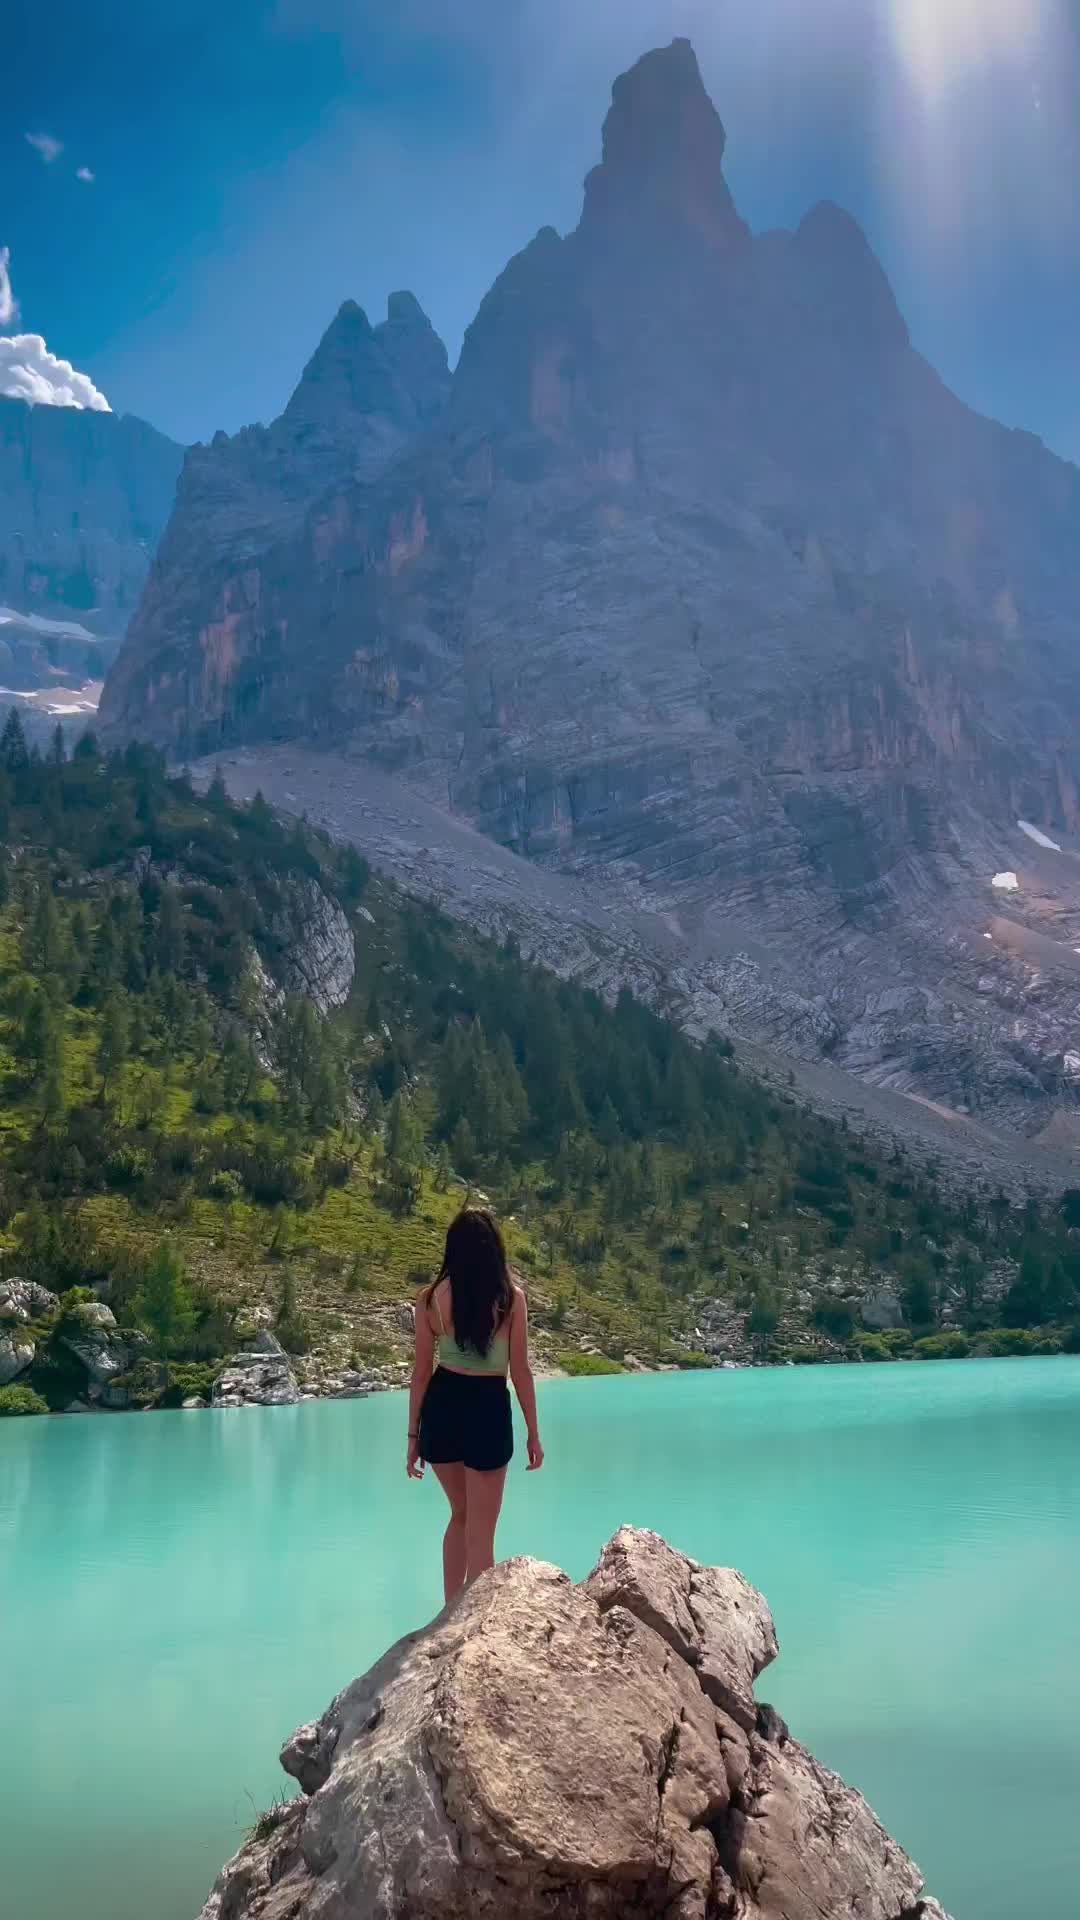 Lago di Sorapis: Stunning Alpine Beauty in Italy